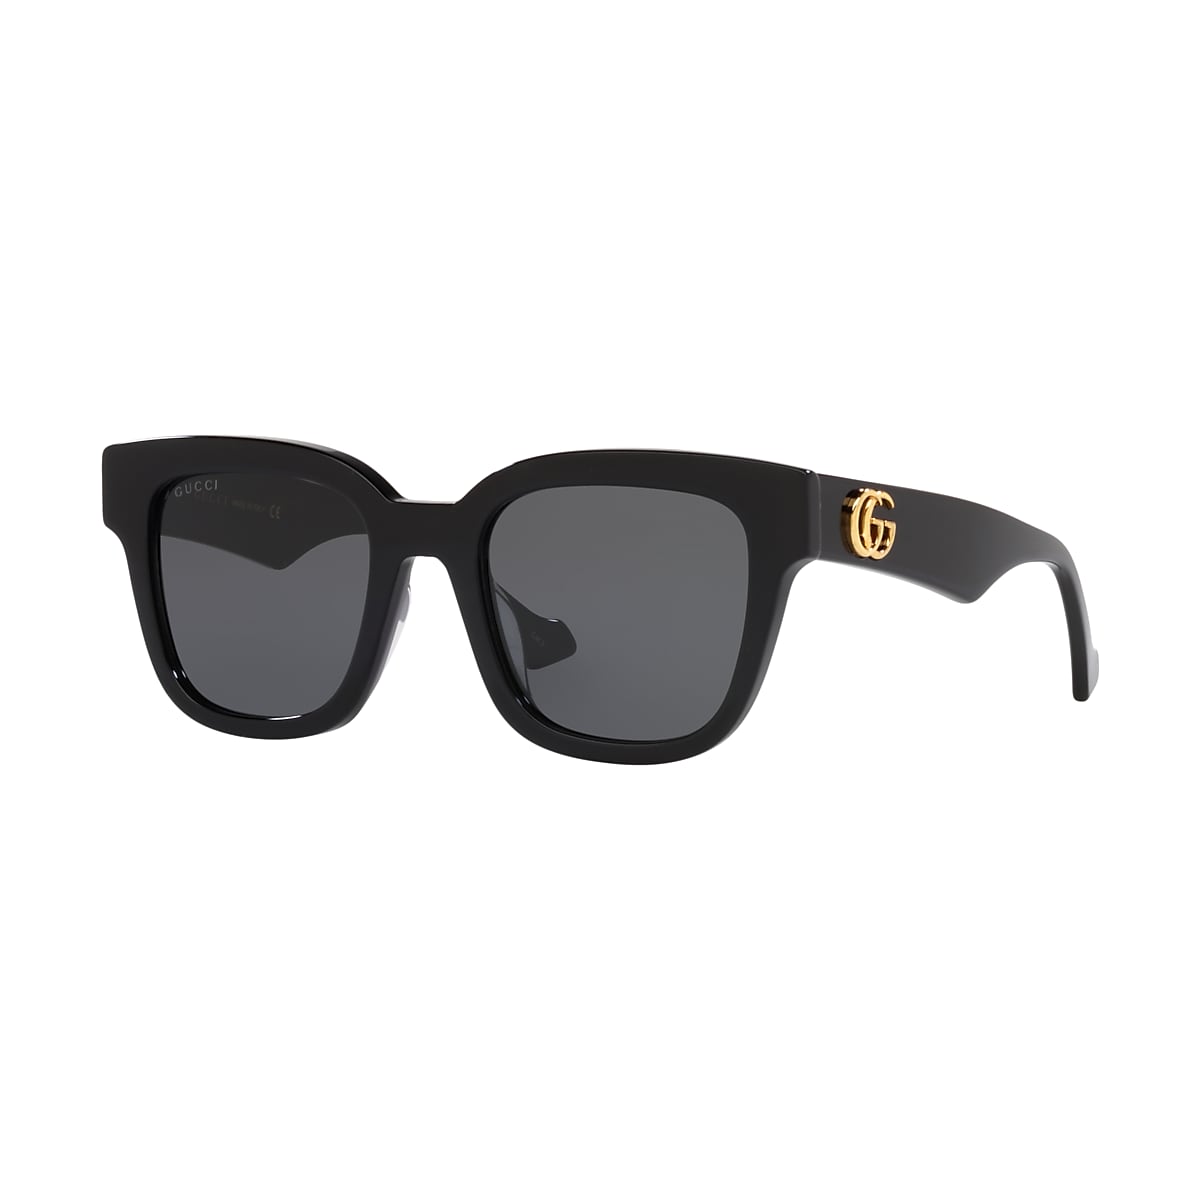 Gucci GG0998S 52 Grey & Black Sunglasses | Sunglass Hut Australia